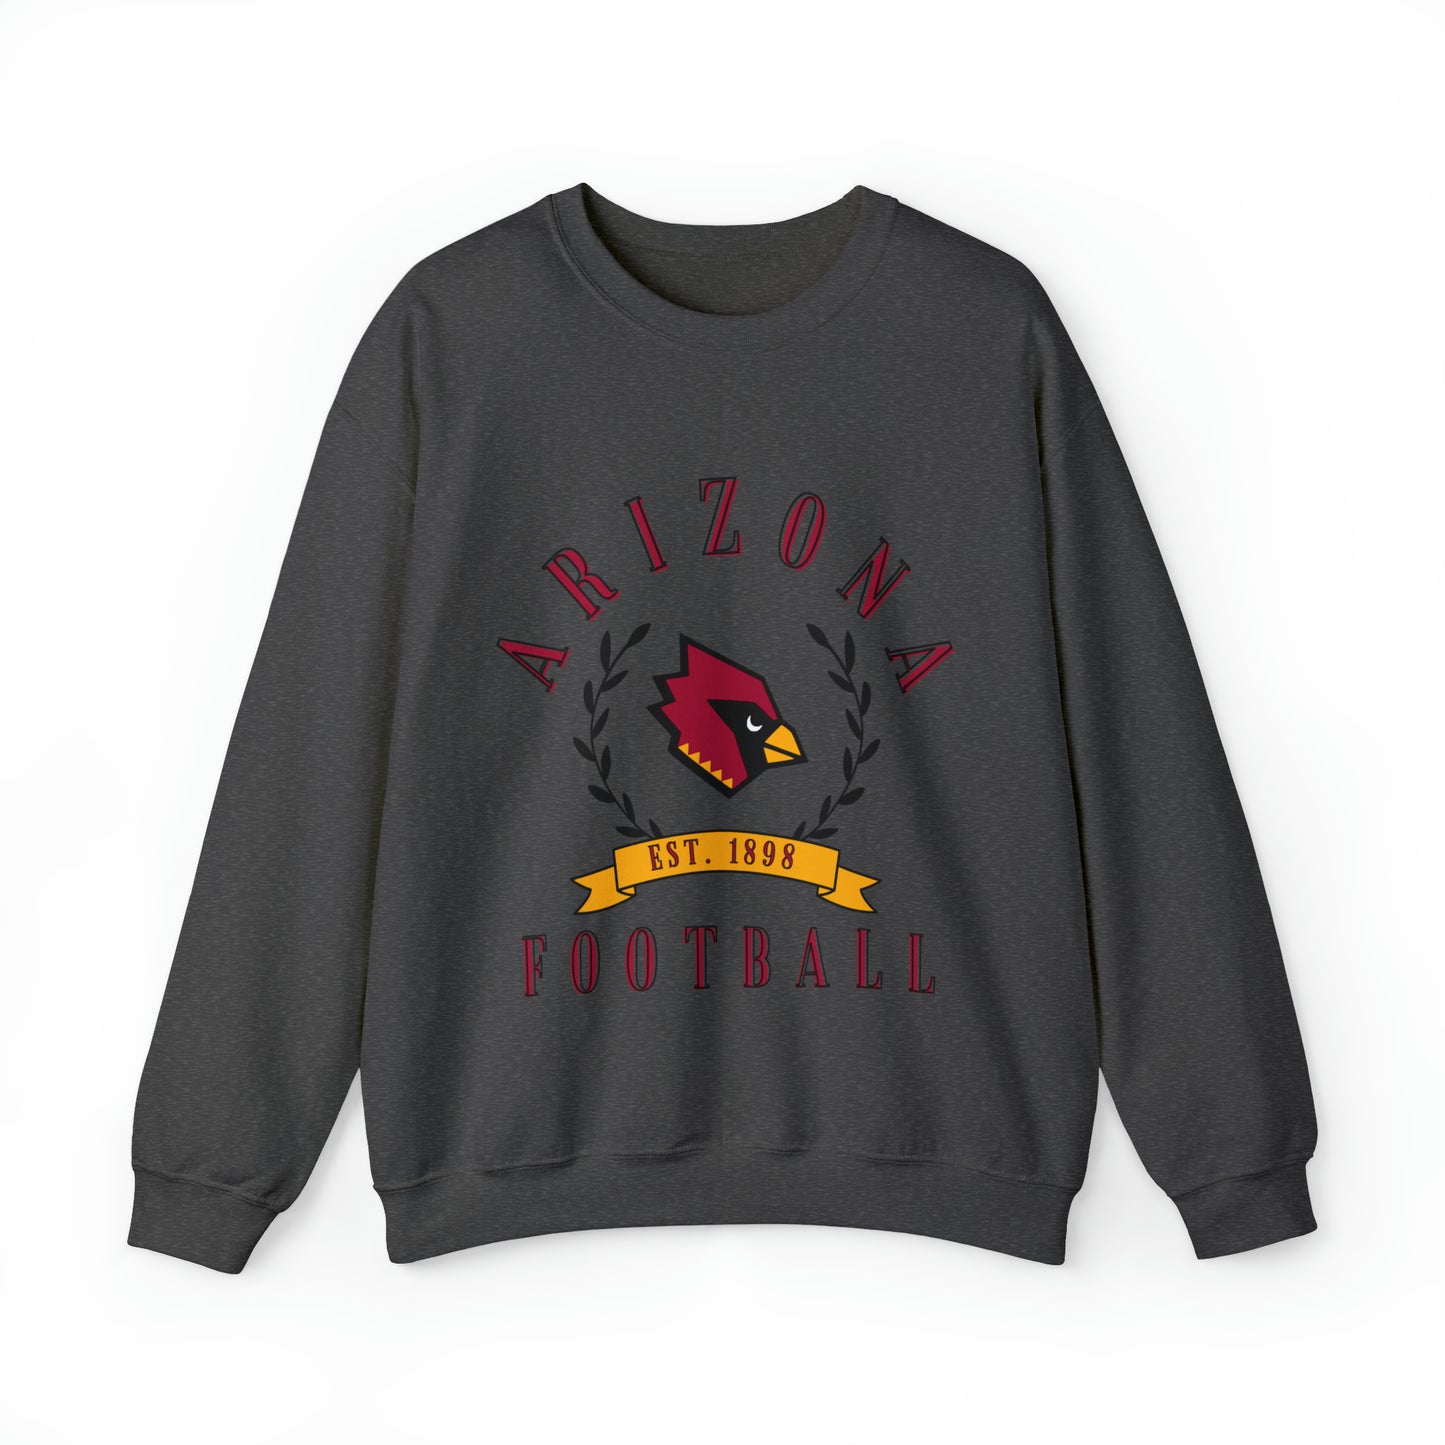 Vintage Arizona Cardinals Sweatshirt - Retro Style Football Crewneck - Men's & Women's Retro Apparel - Design 3